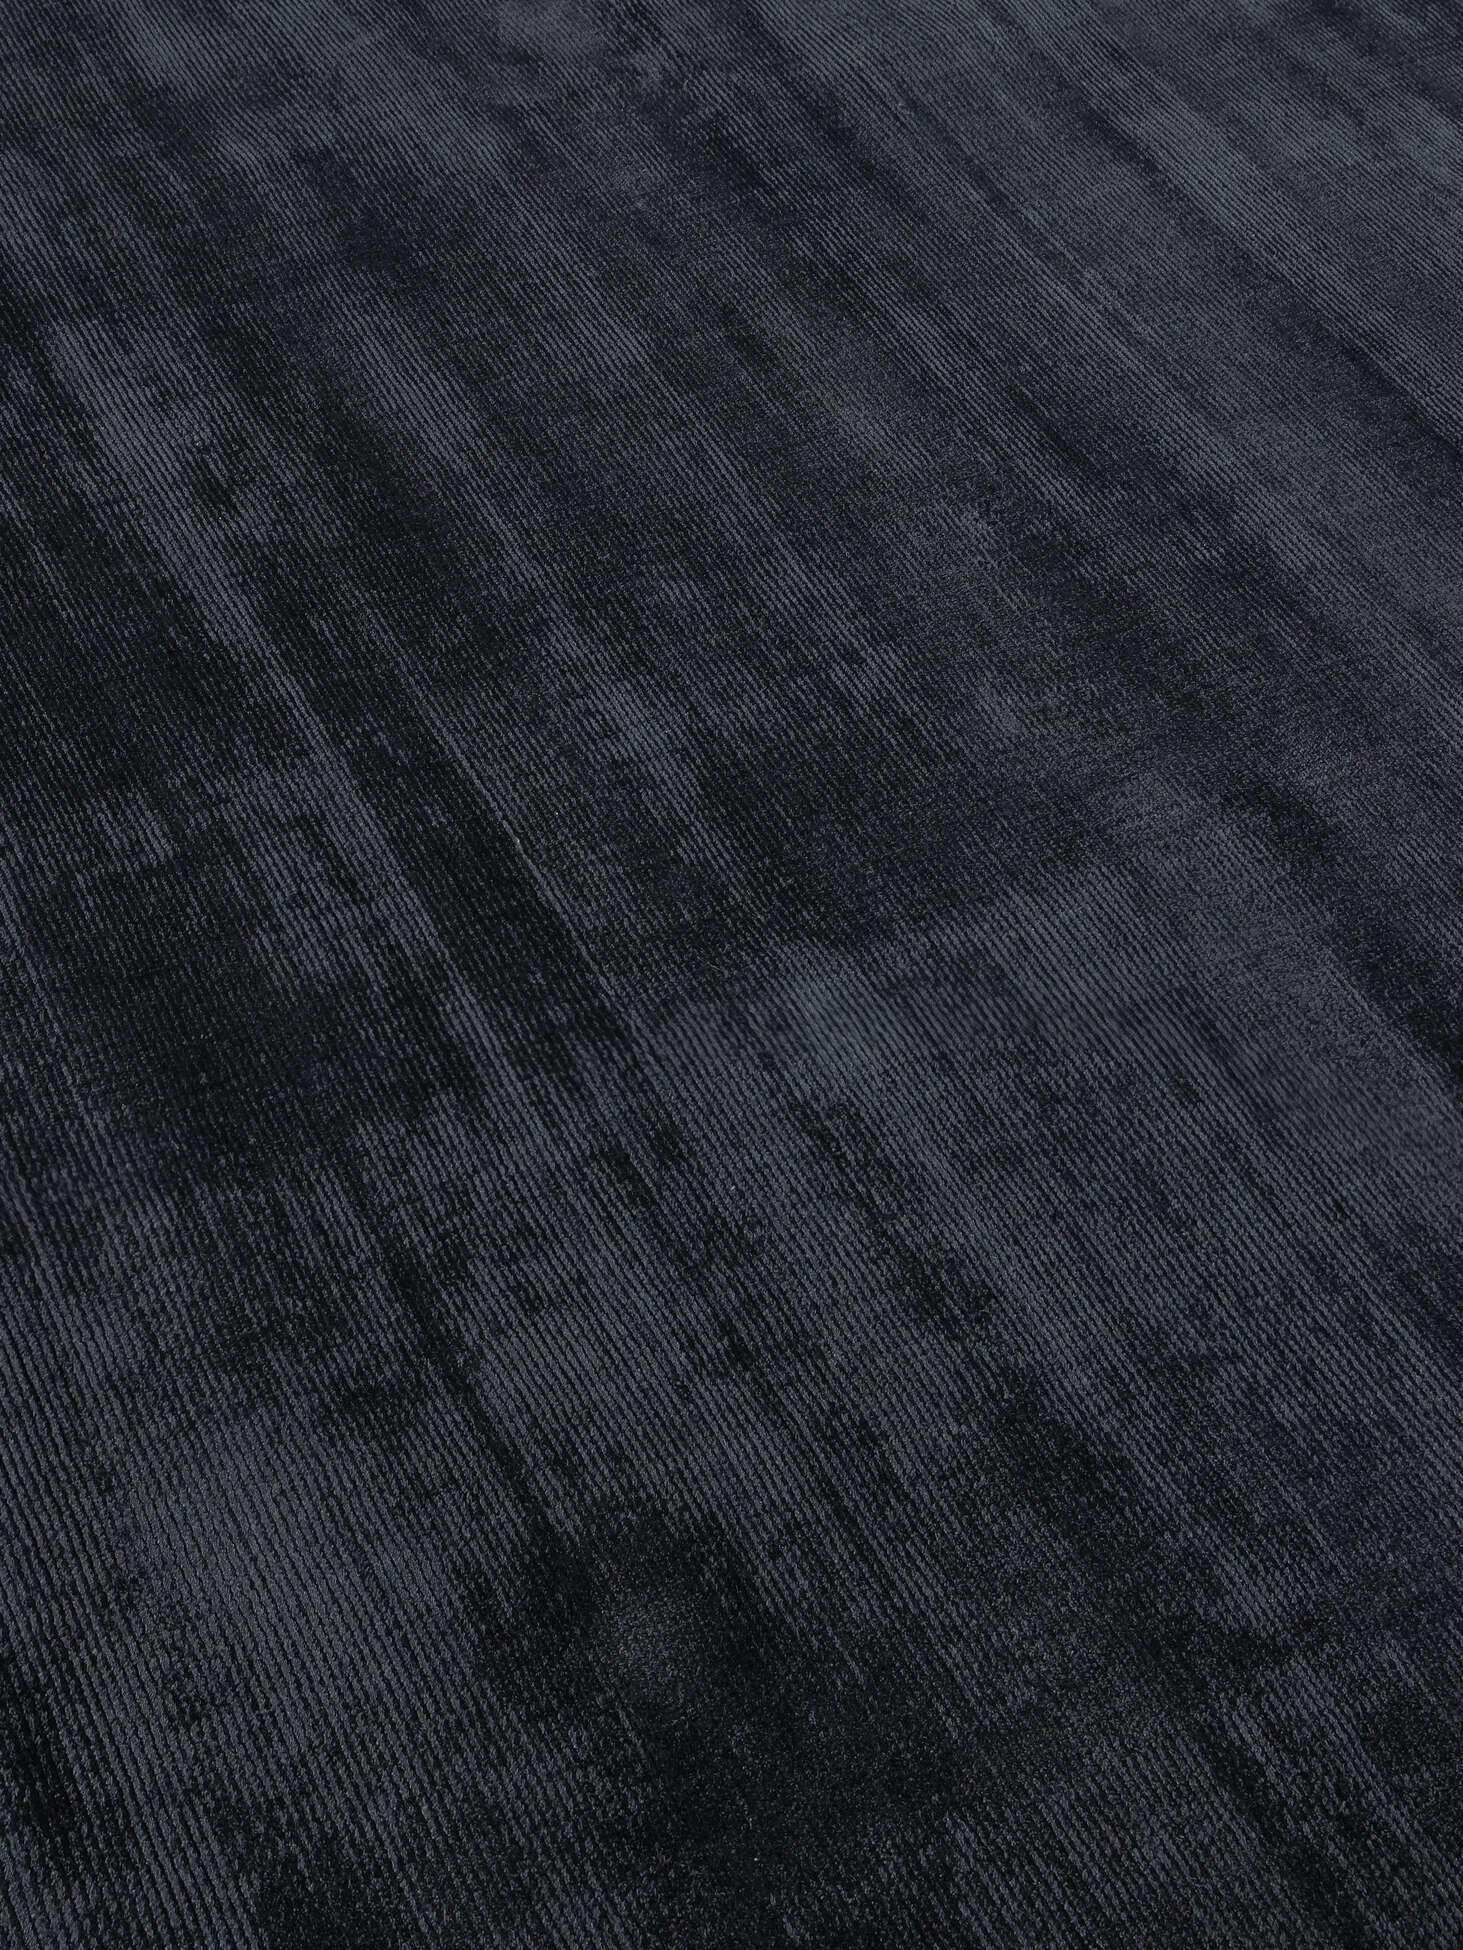 
    Tribeca - Charcoal grey - 160 x 230 cm
  